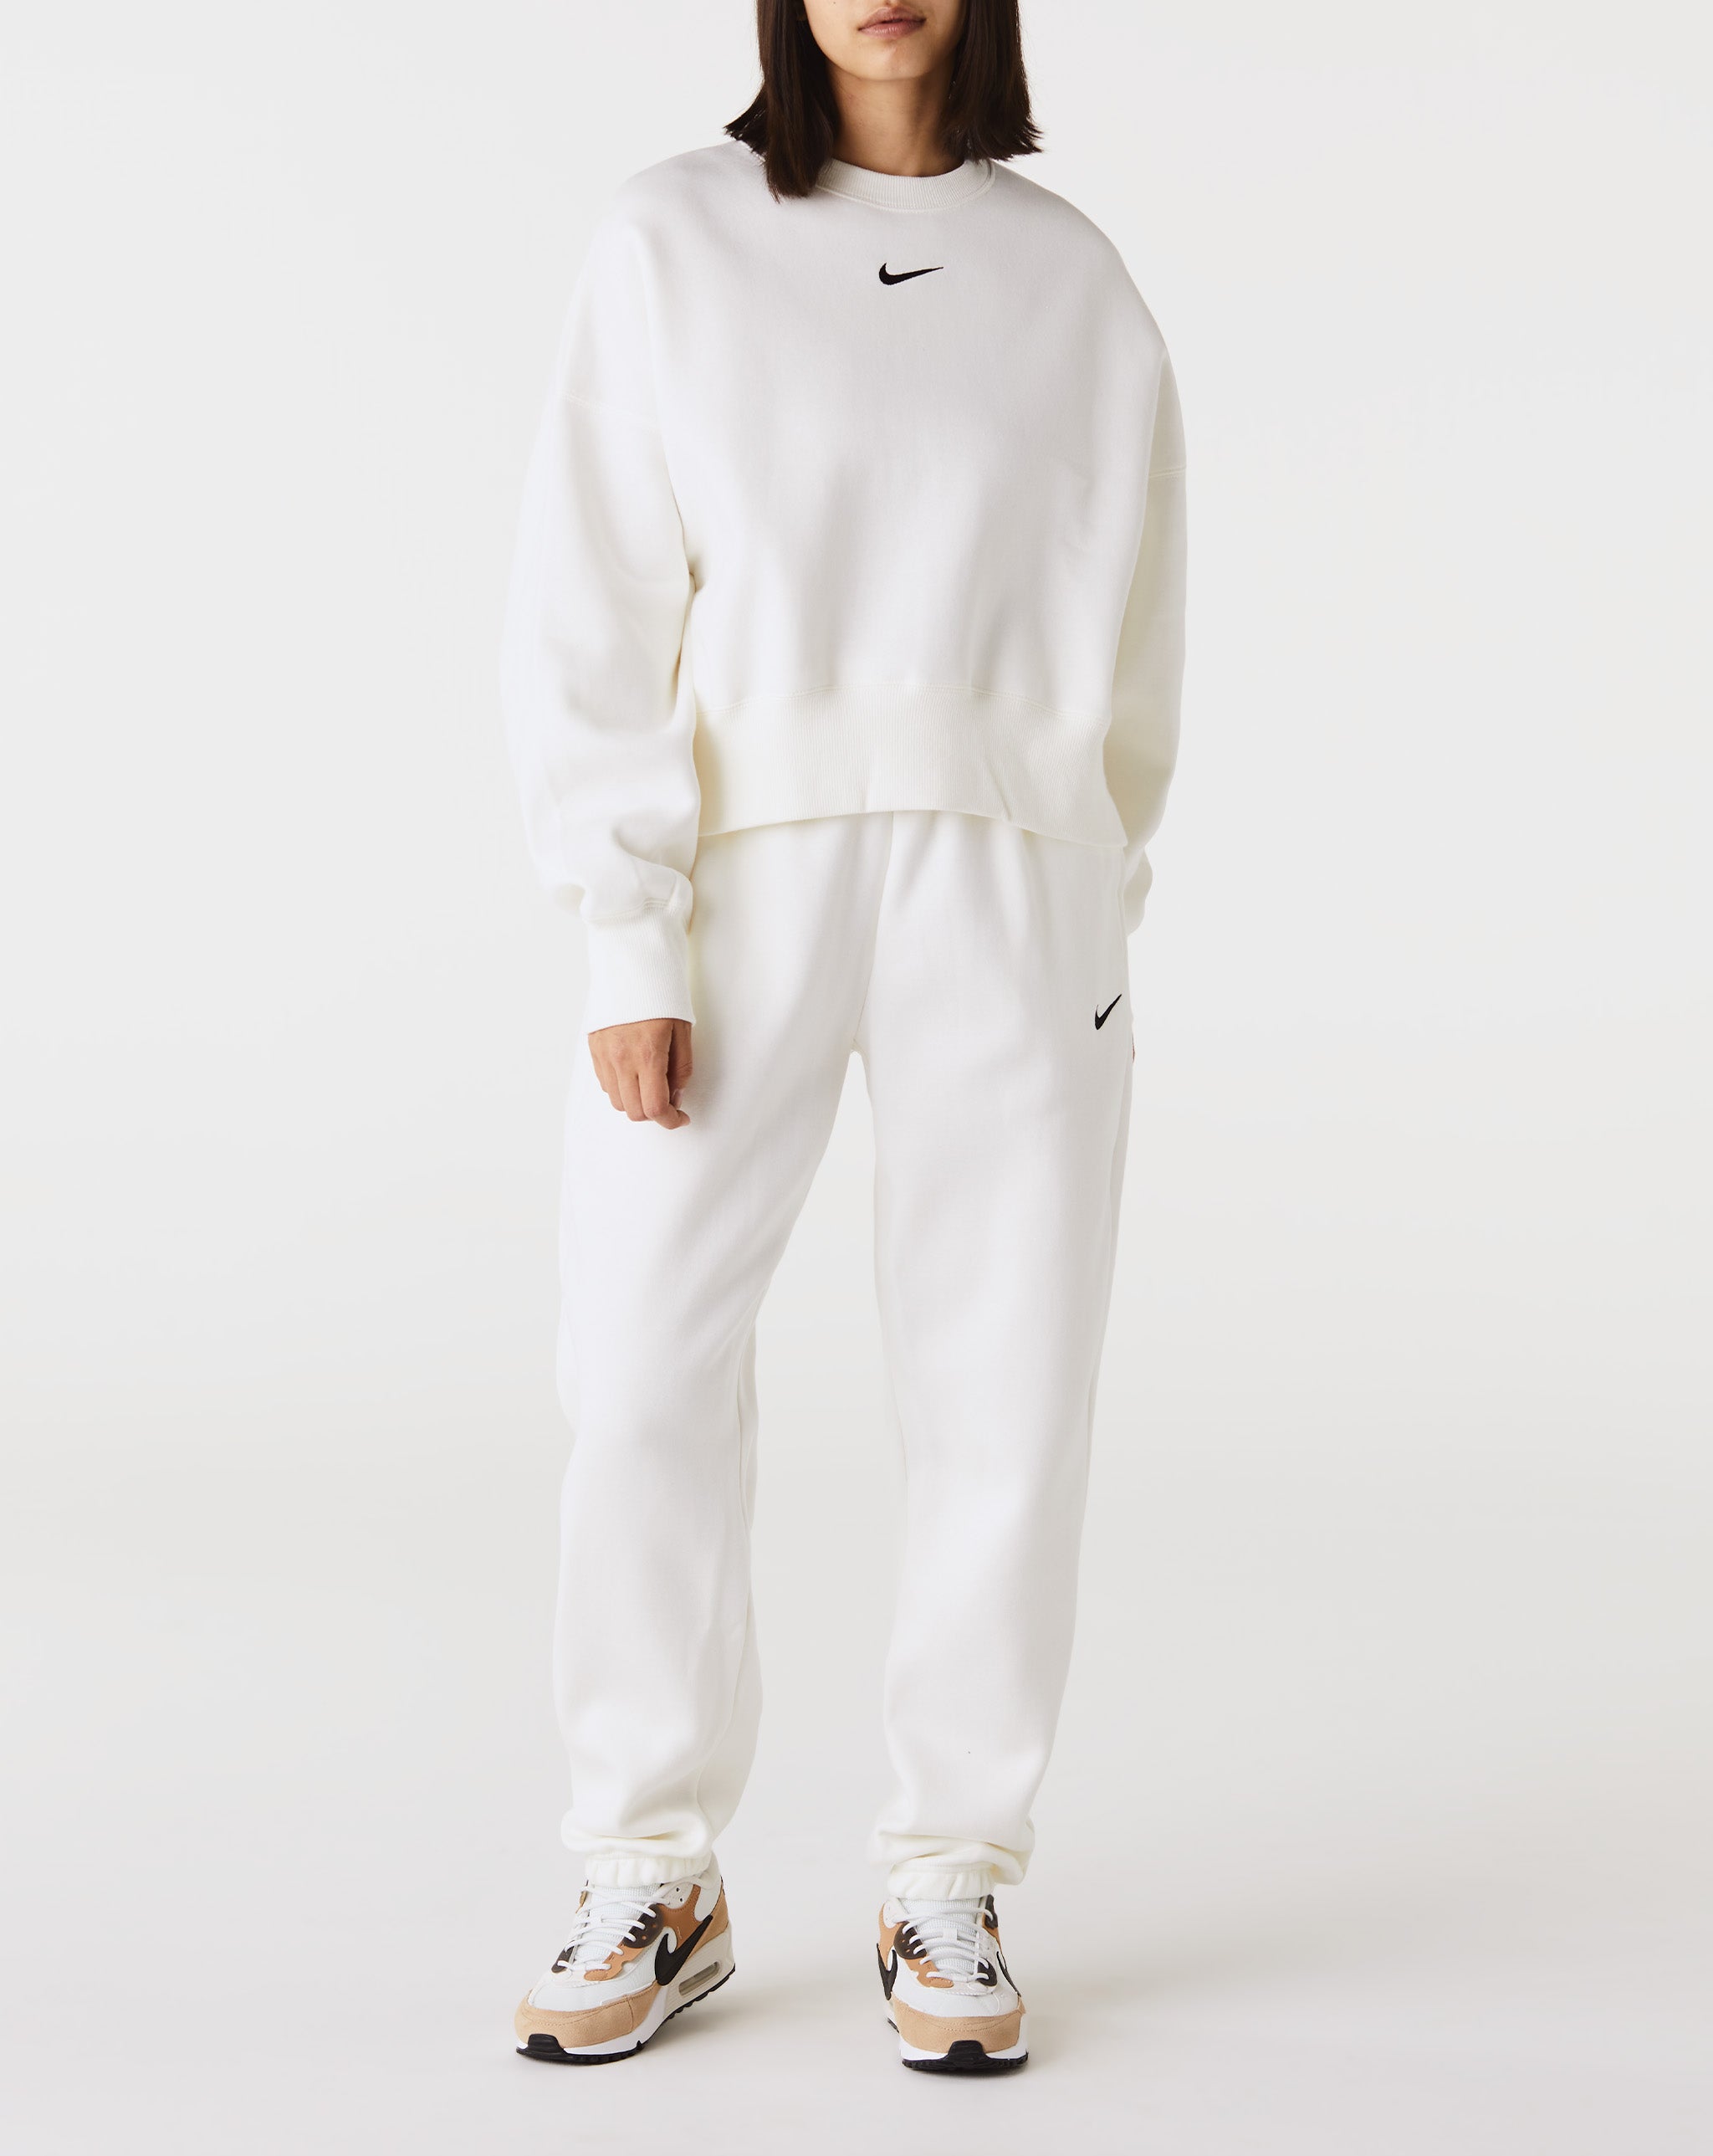 Nike Women's Phoenix Fleece Over-Oversized Crewneck - Rule of Next Apparel